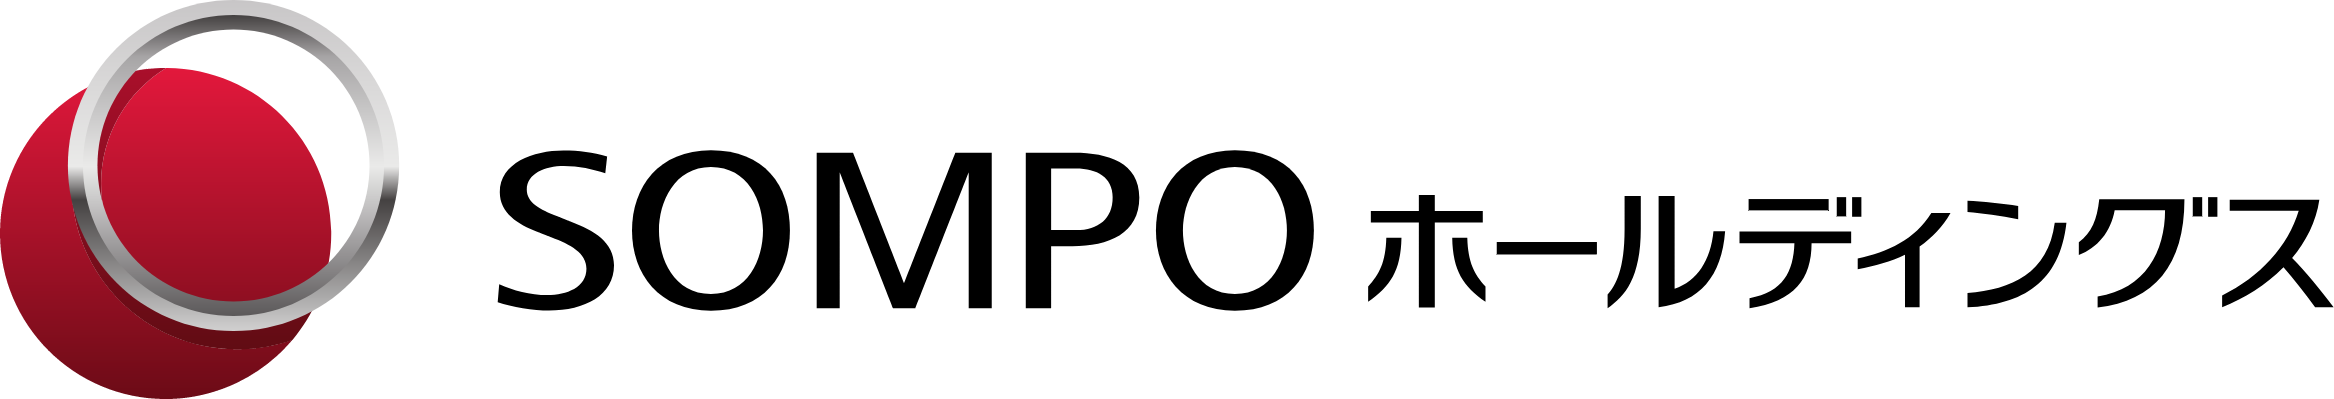 Sompo Holdings

 logo large (transparent PNG)